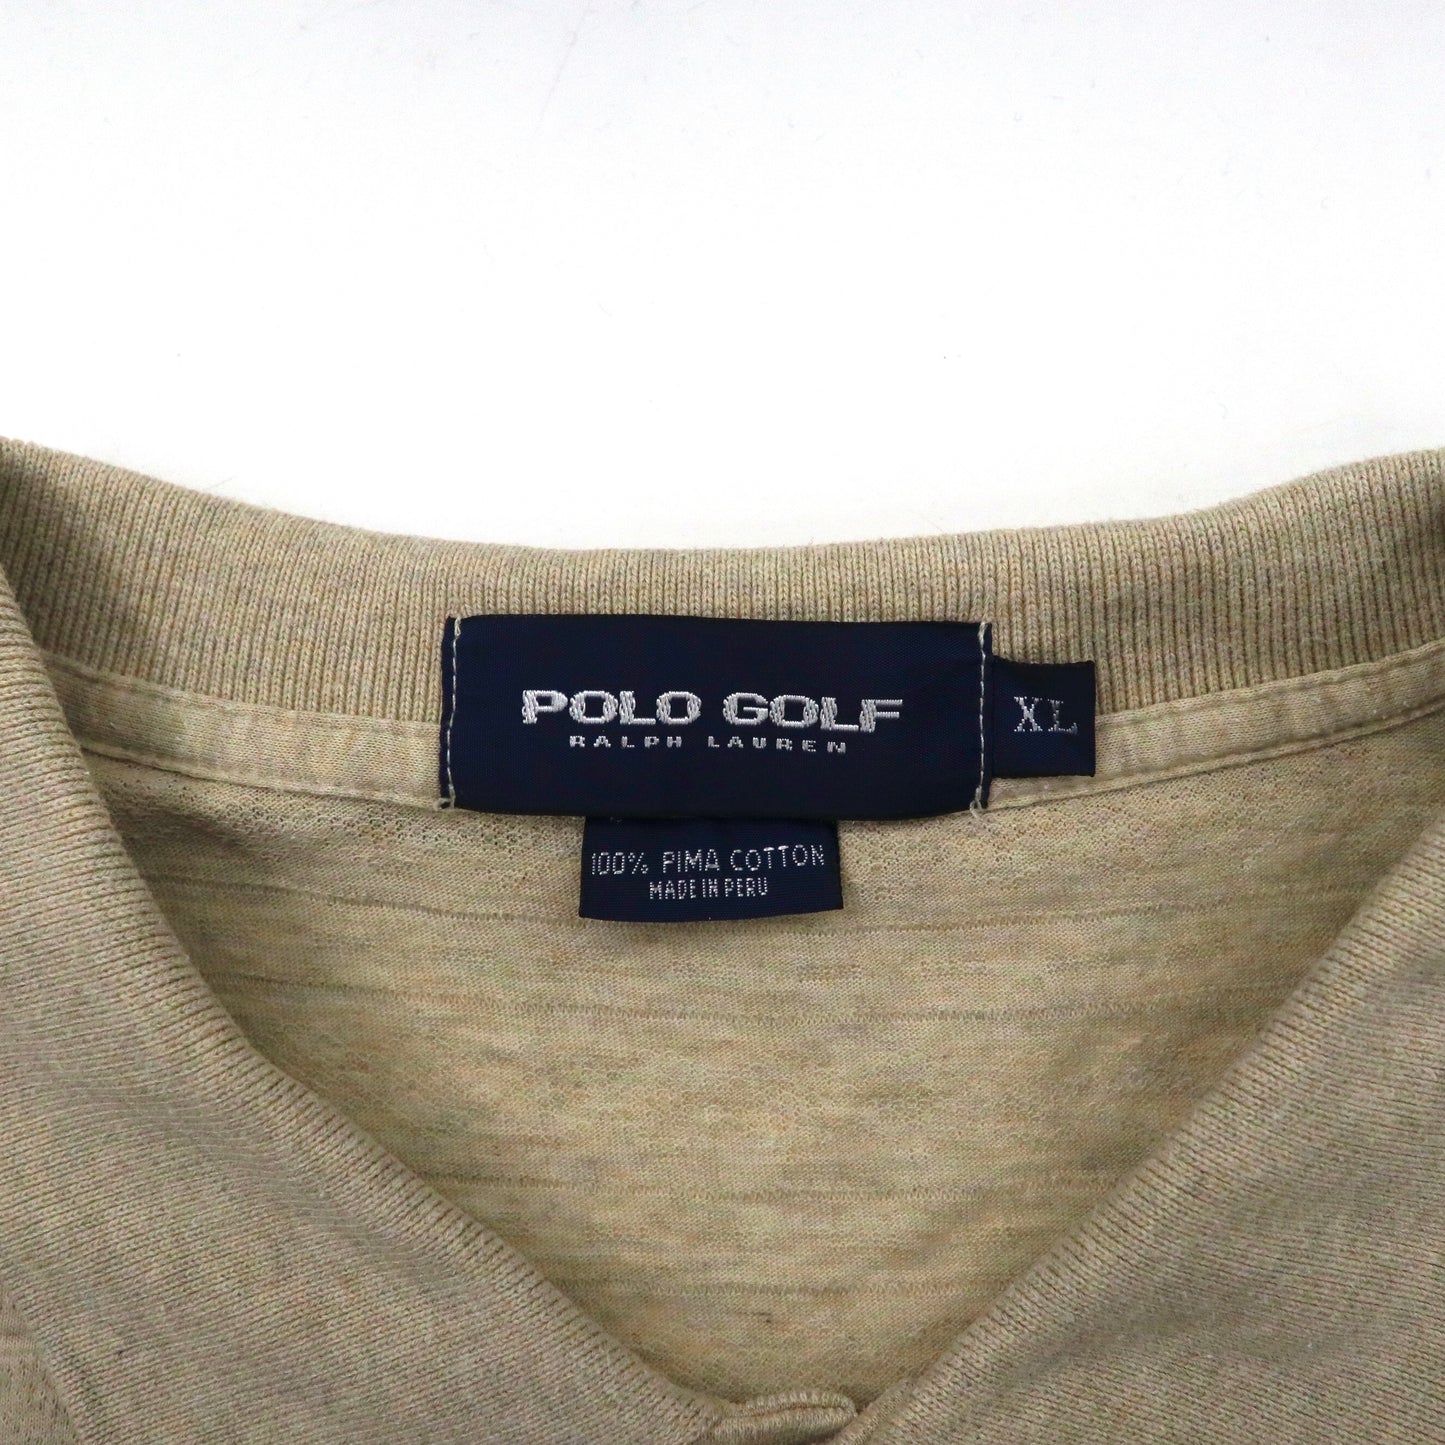 POLO GOLF RALPH LAUREN ビッグサイズ 長袖ポロシャツ XL クリーム ピマコットン ペルー製